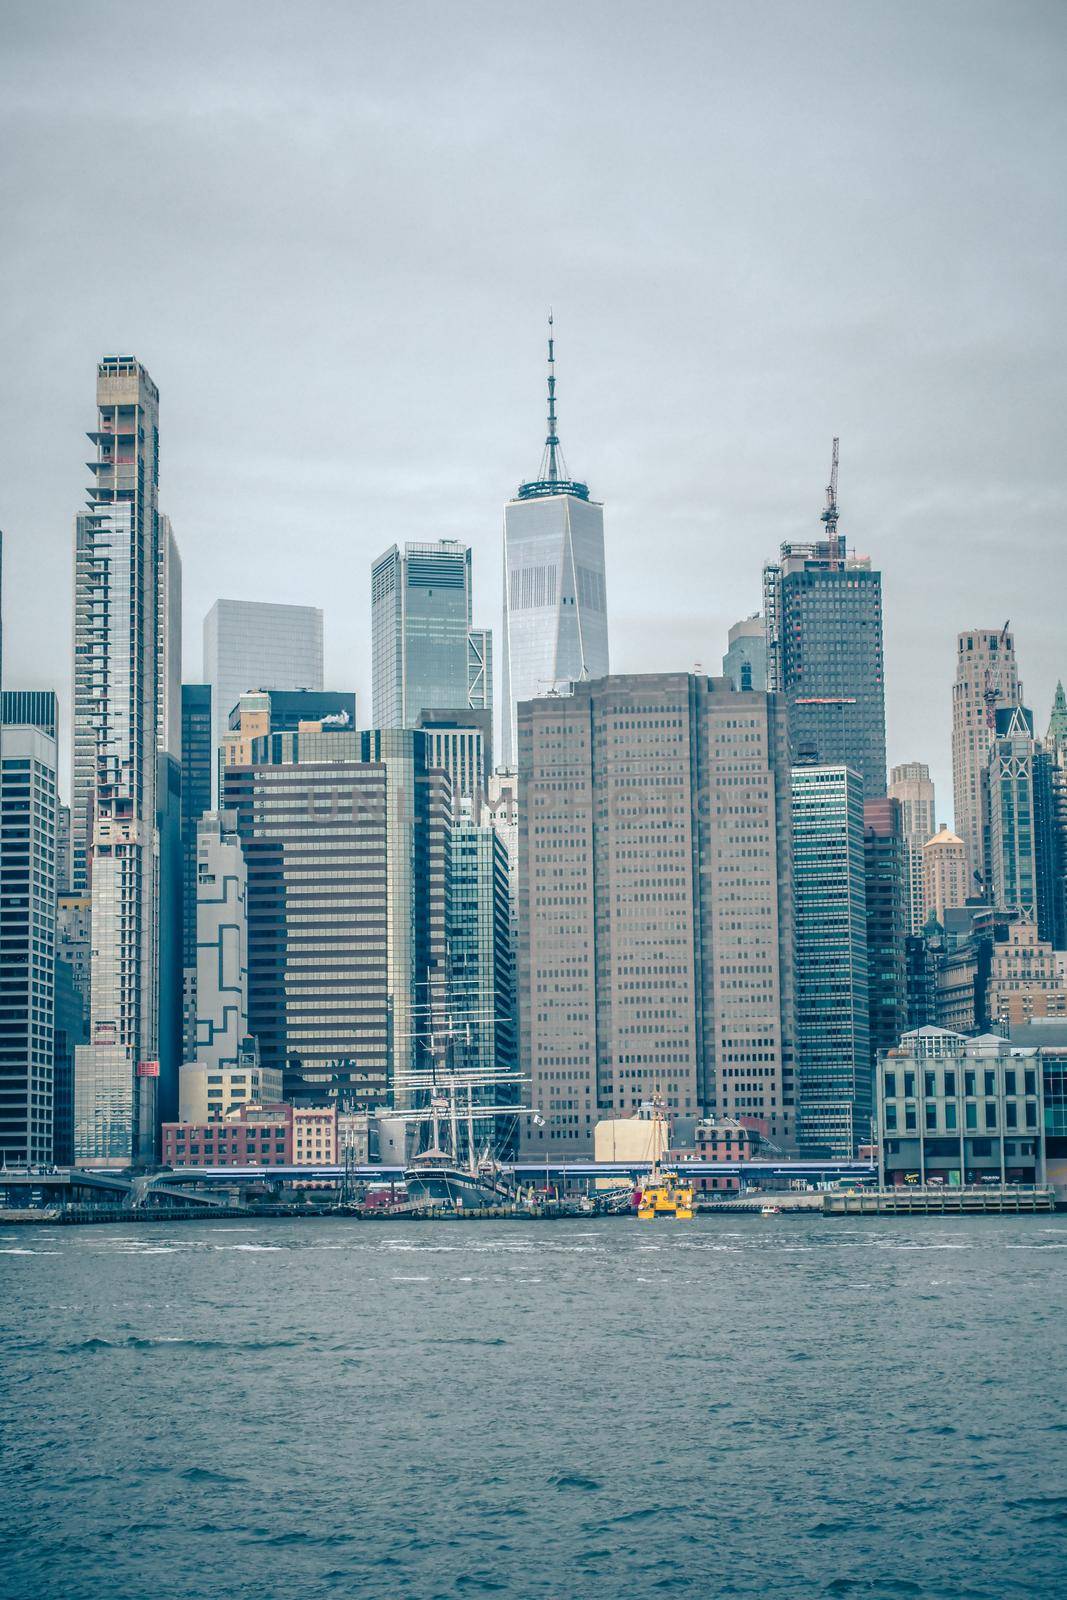 new york city manhattan skyline on a cloudy day in november by digidreamgrafix